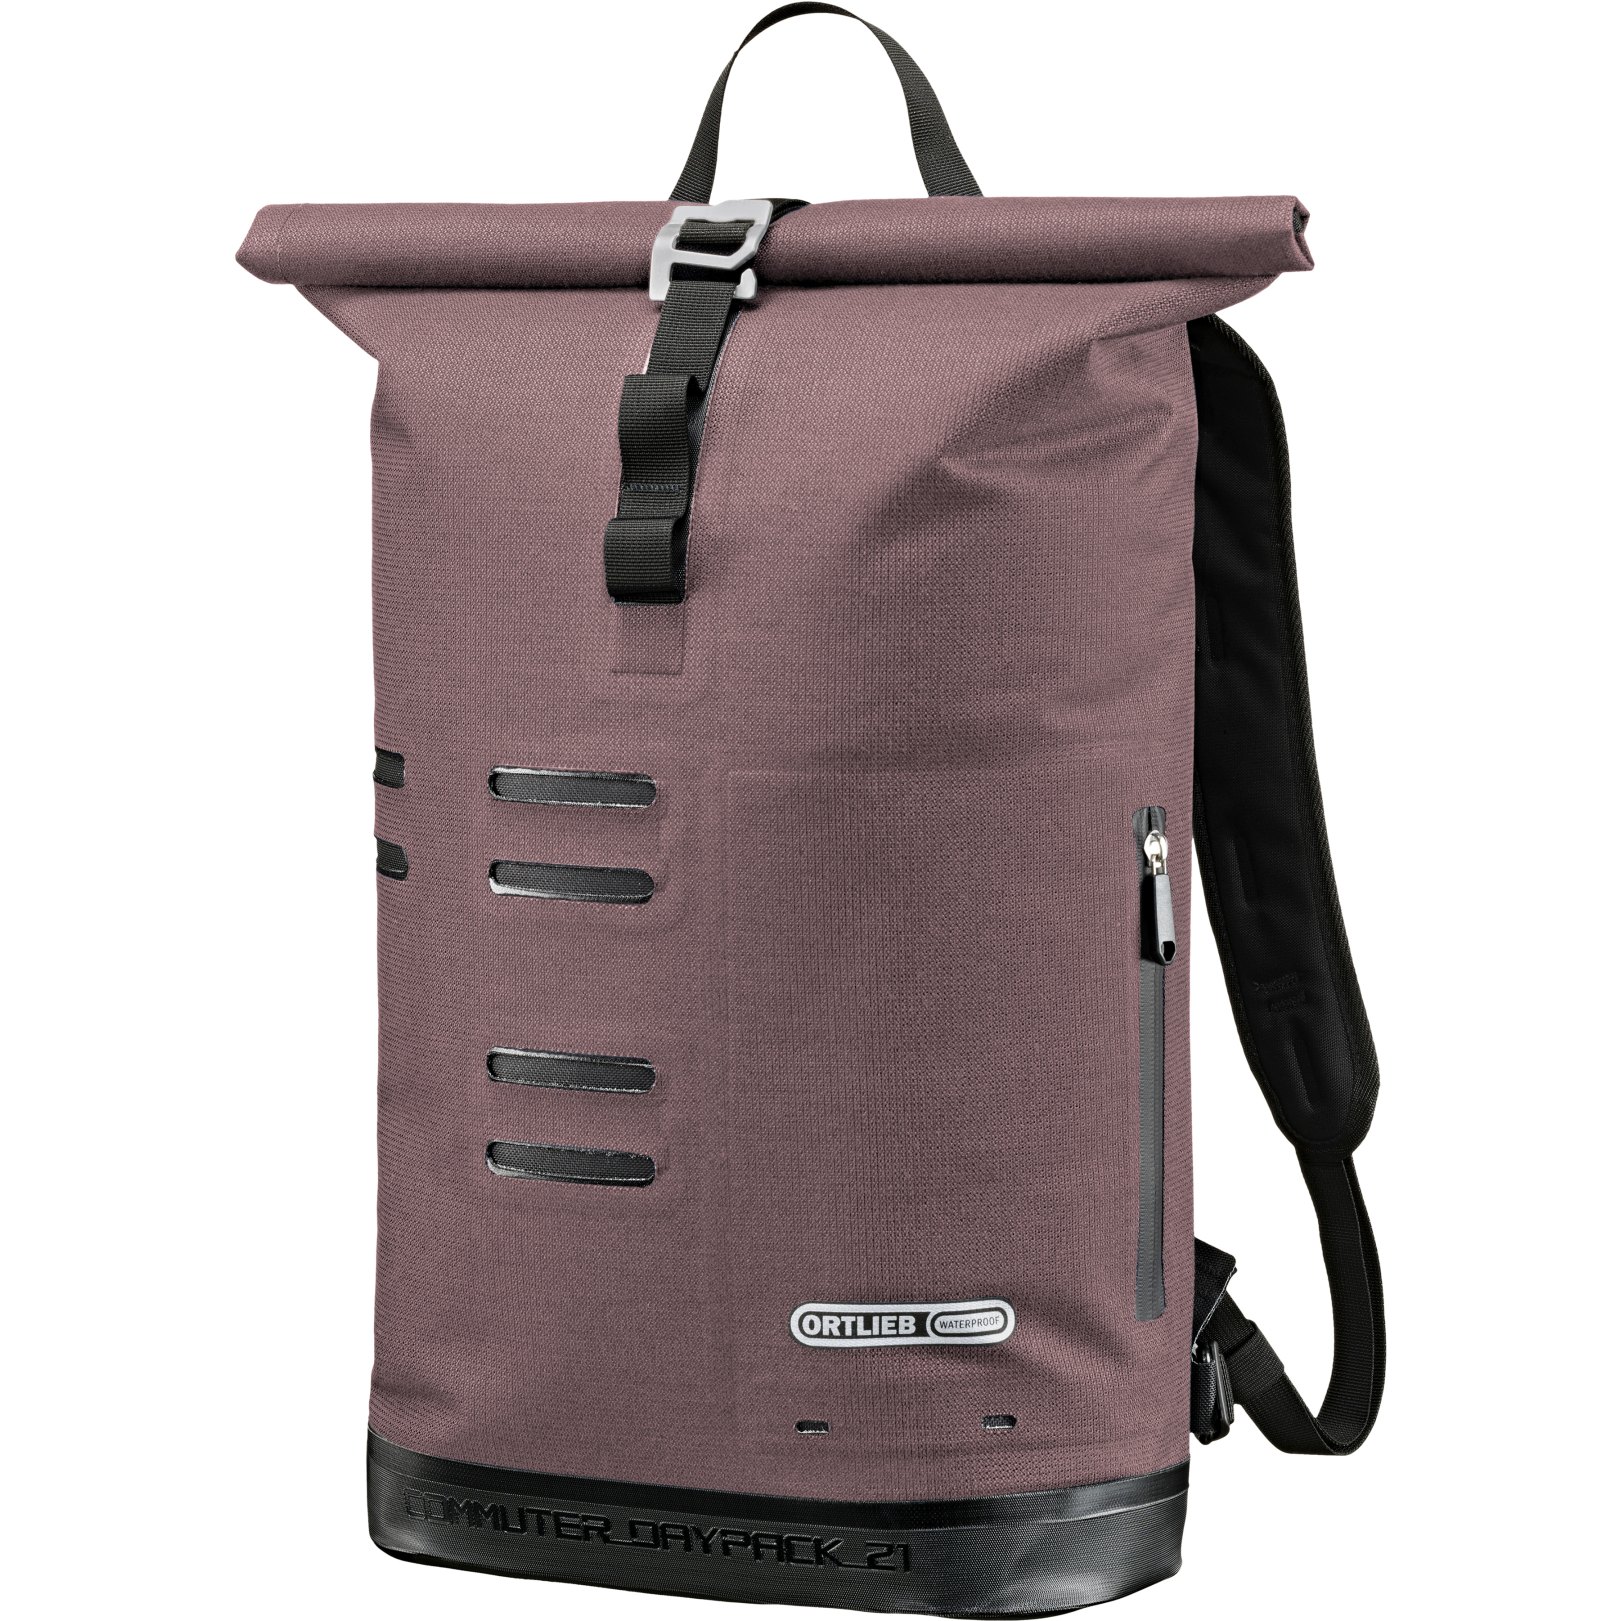 Productfoto van ORTLIEB Commuter-Daypack Urban 21L Backpack - ash rose